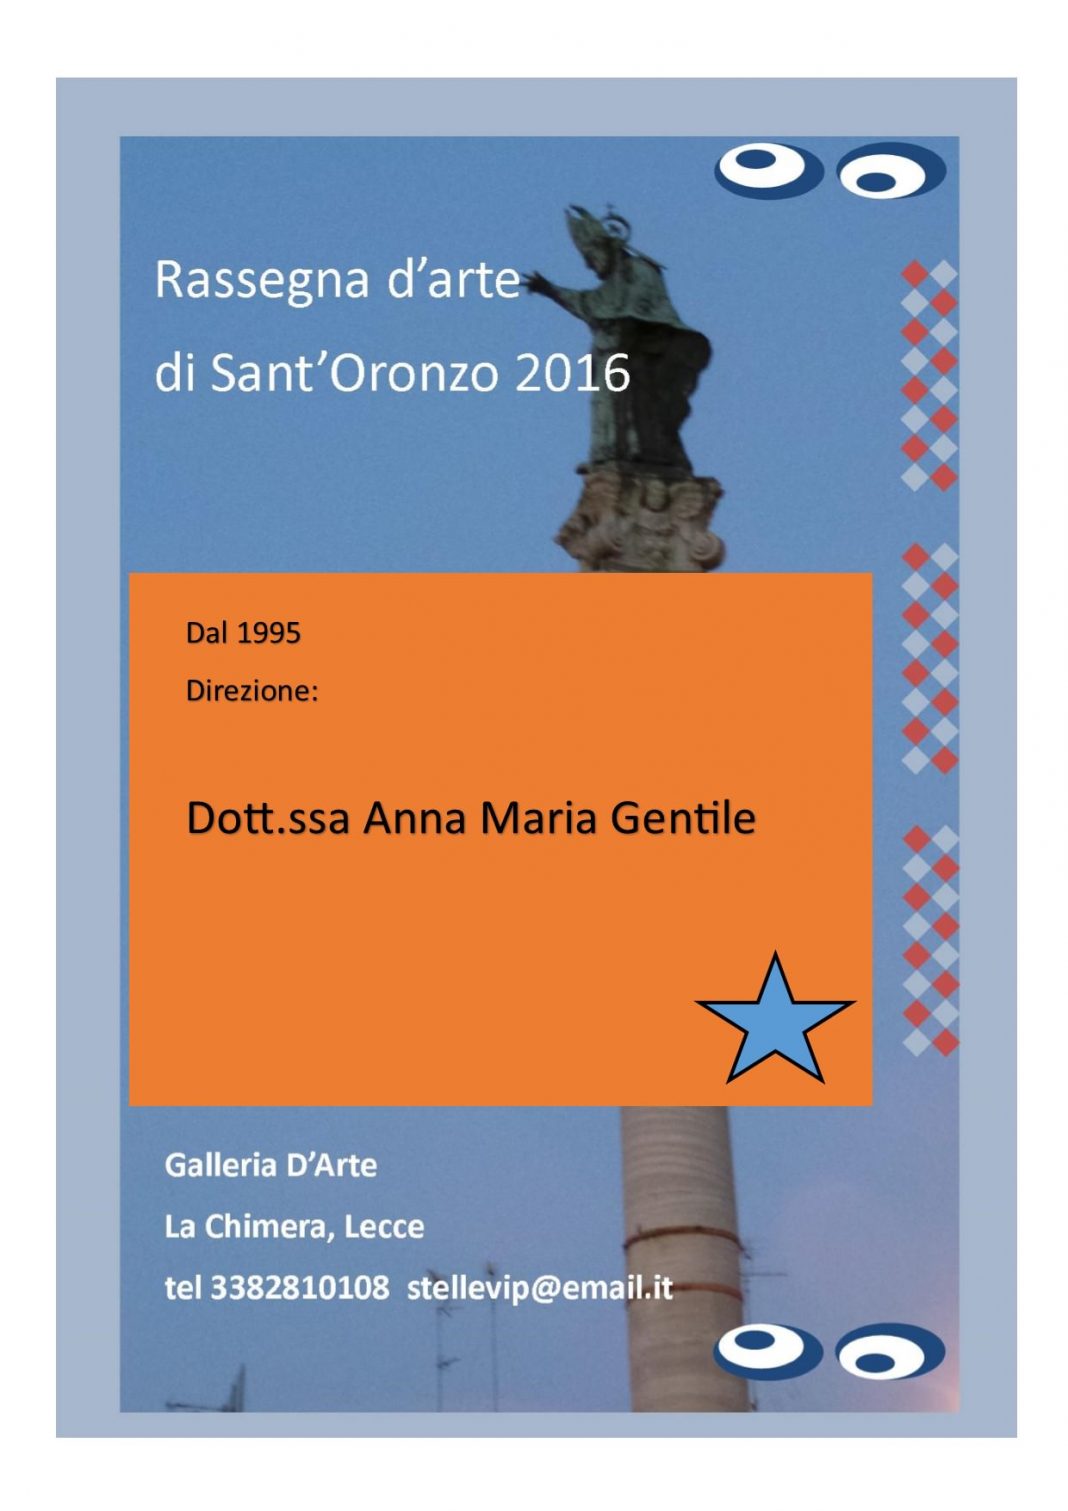 Rassegna d’Arte di Sant’Oronzo 2016 (dal 1995)https://www.exibart.com/repository/media/eventi/2016/08/rassegna-d8217arte-di-sant8217oronzo-2016-dal-1995-1068x1511.jpg